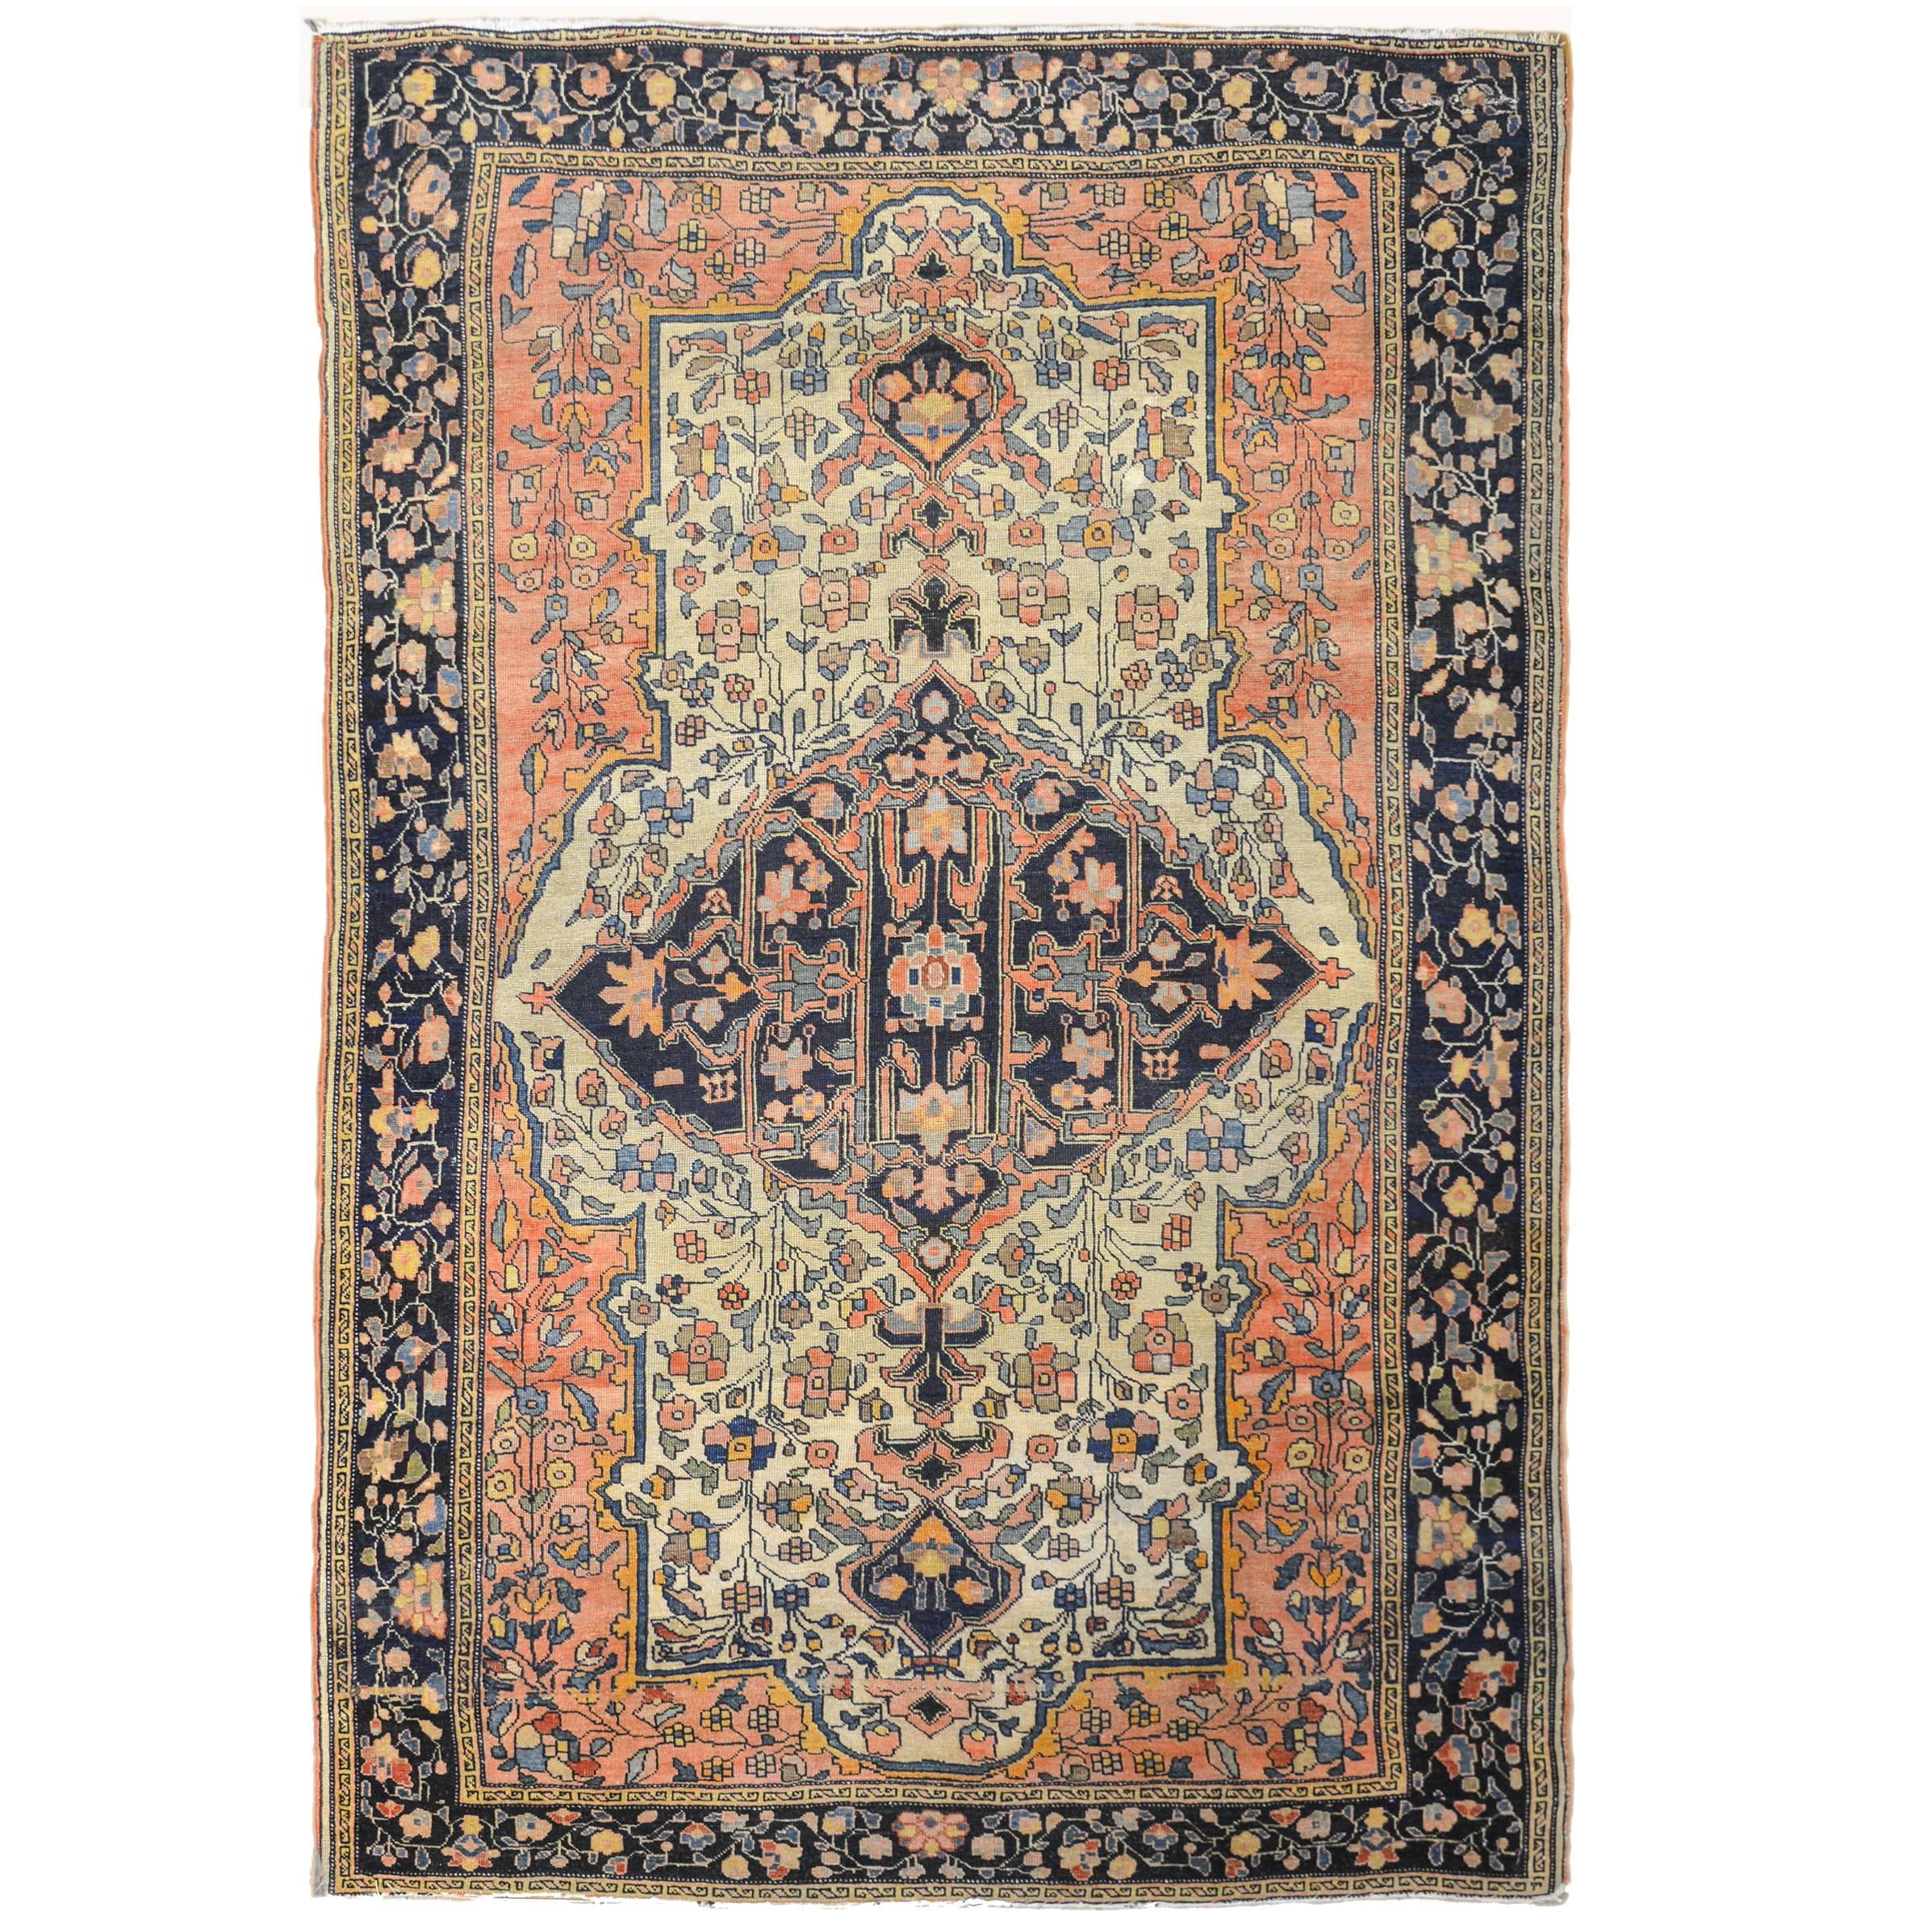 Merveilleux tapis Sarouk Farahan du 19ème siècle